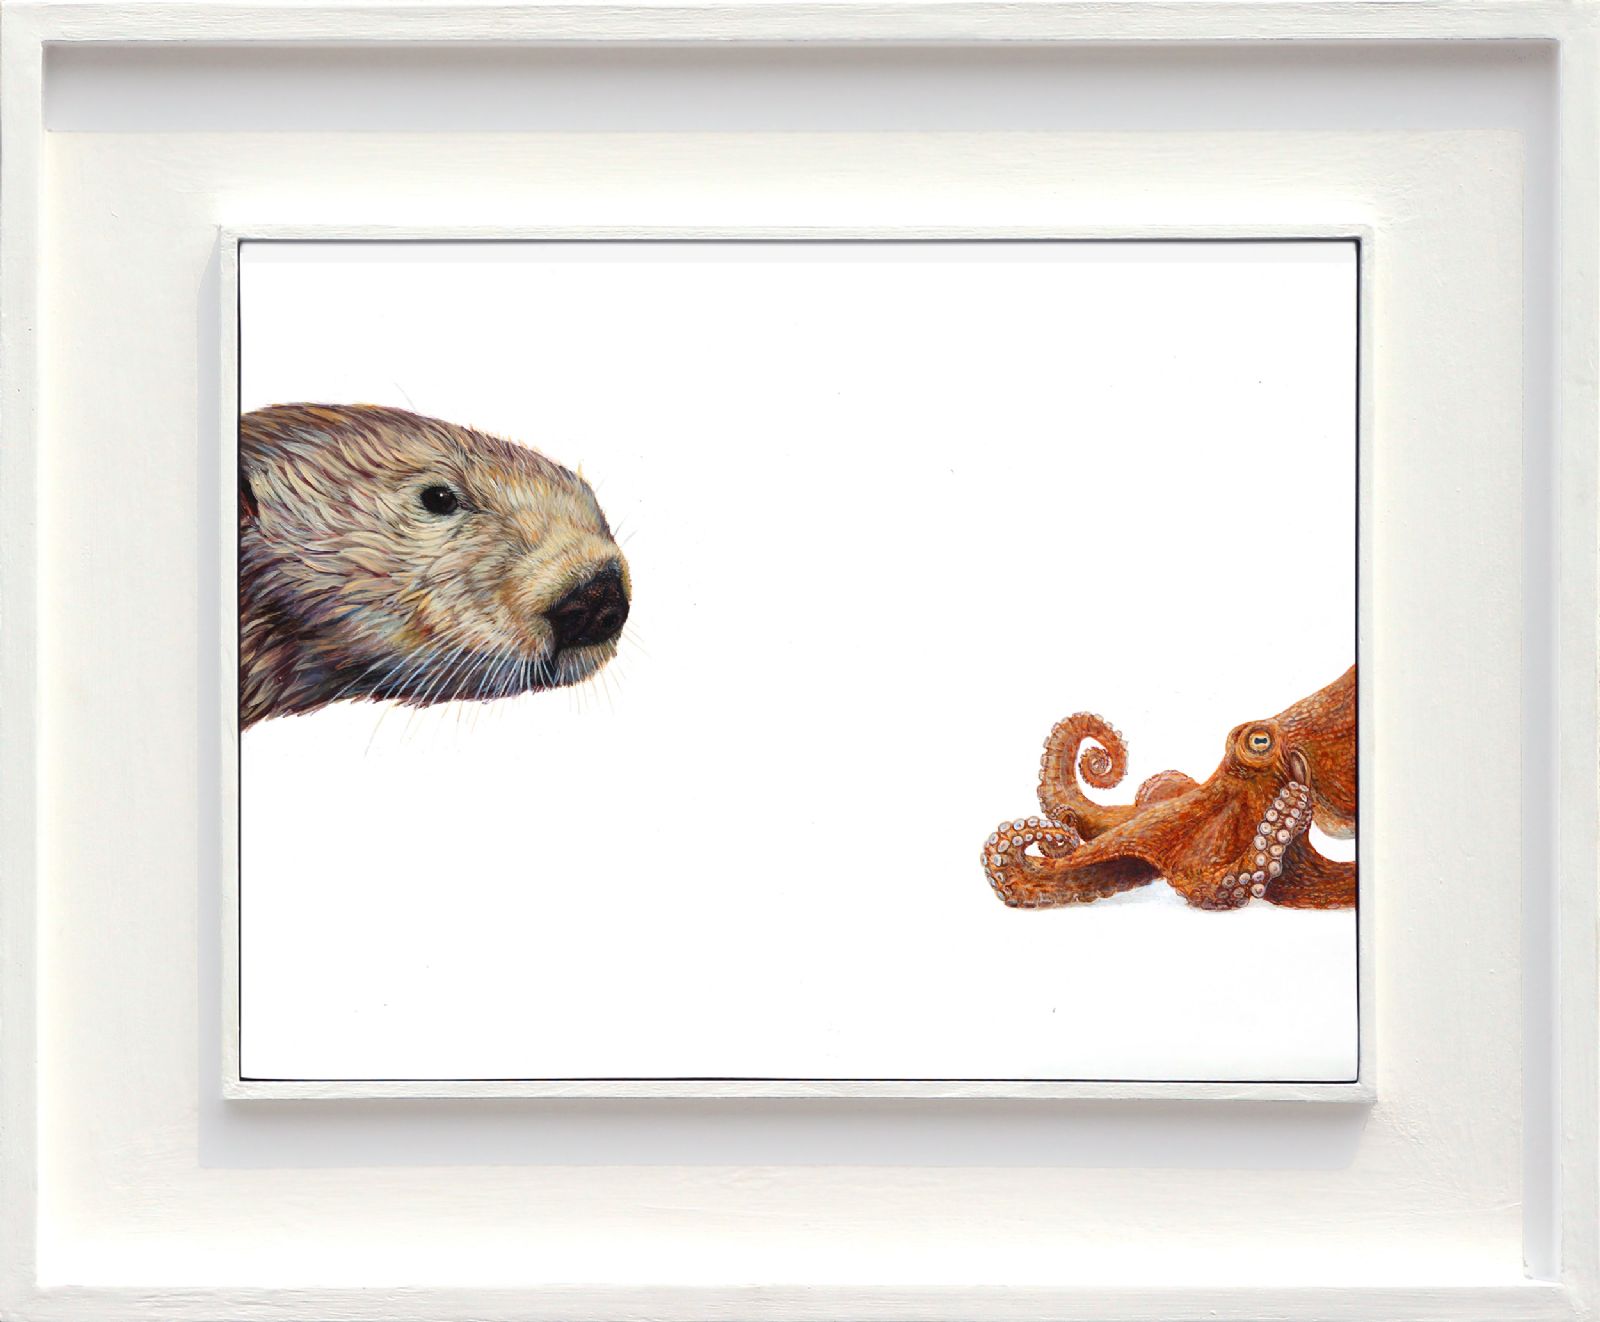 Top Predator: Otter & Octopus by Hazel Mountford